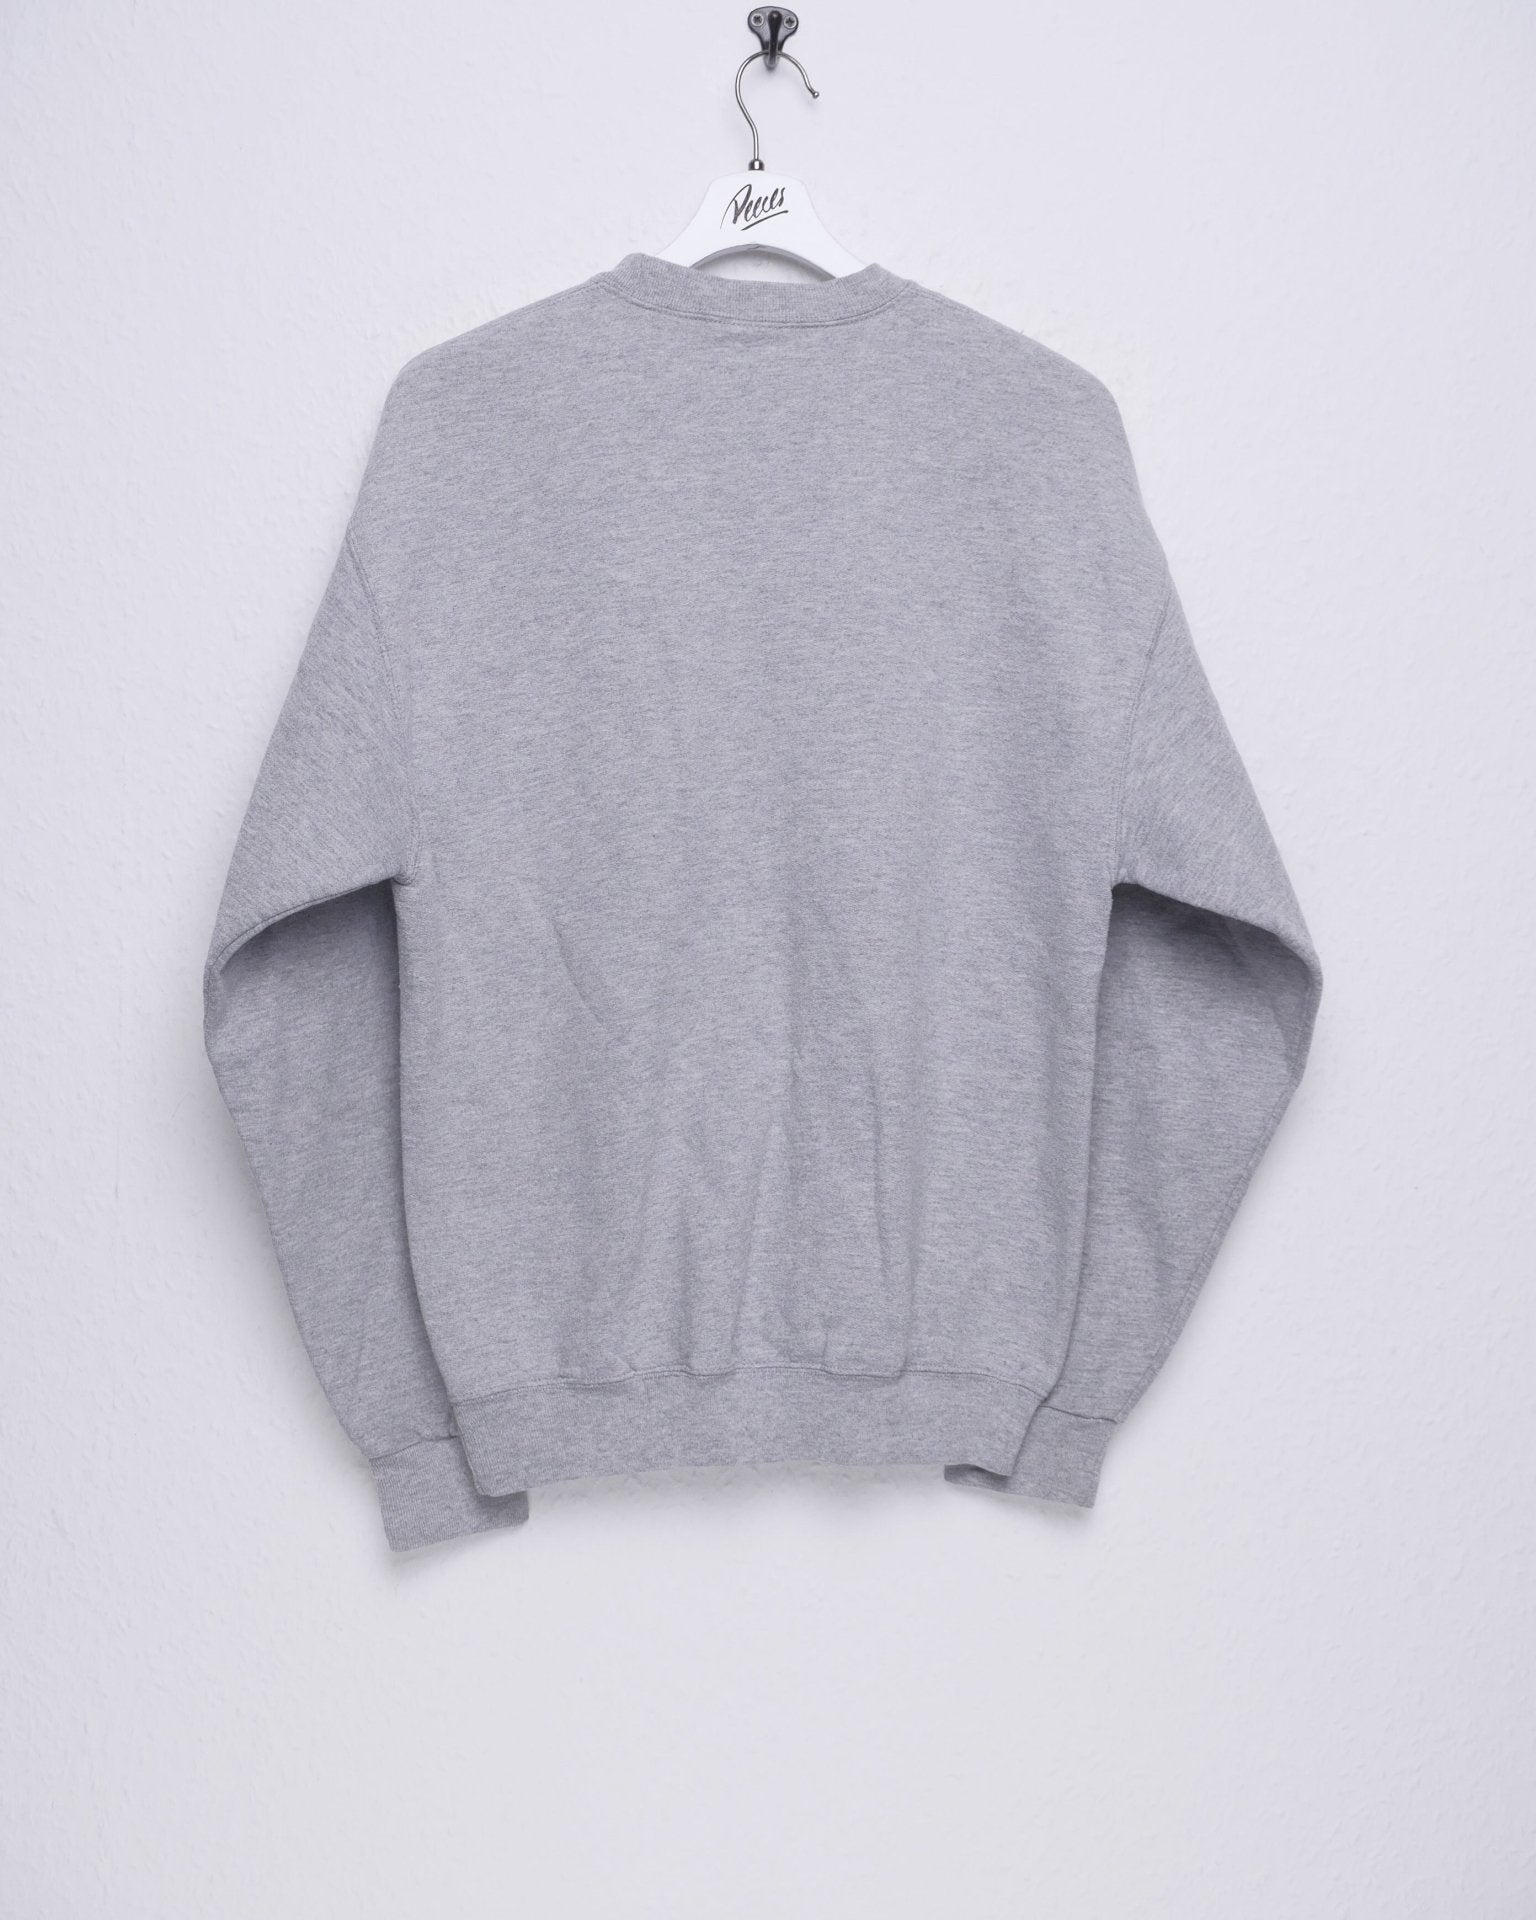 jerzees Seaworld printed Graphic grey Sweater - Peeces